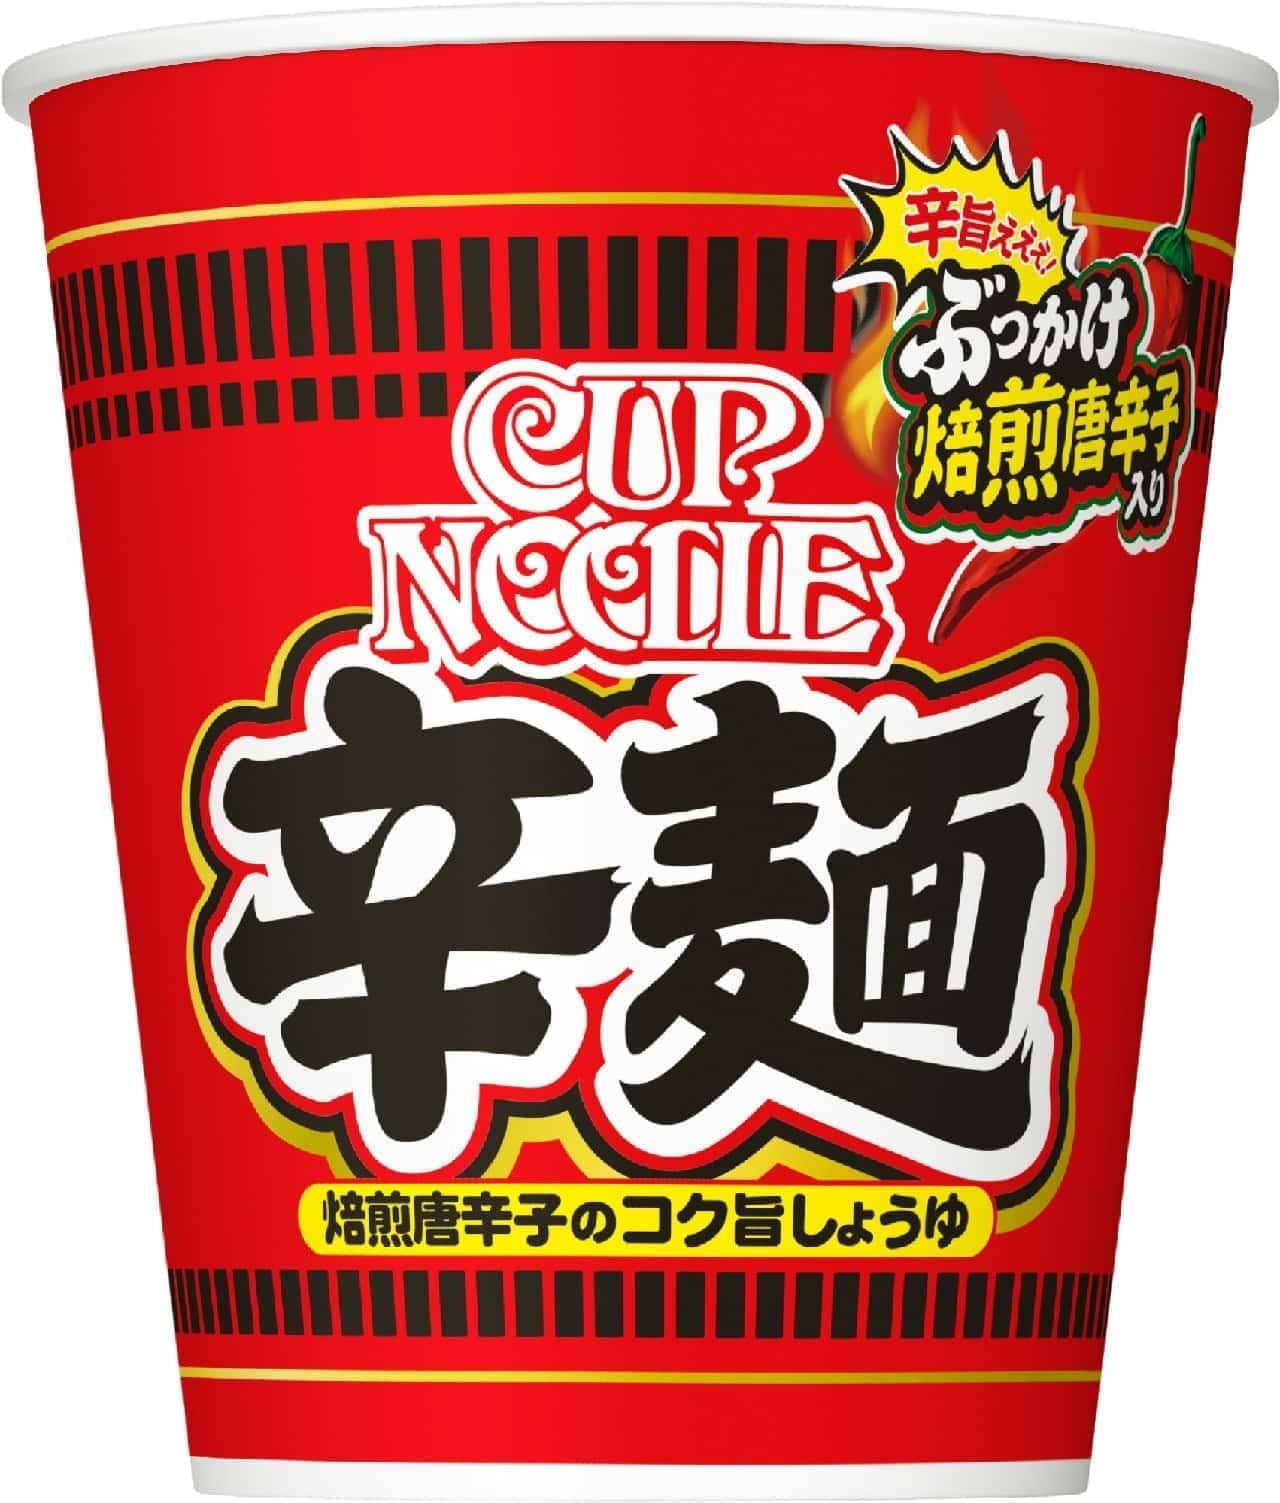 Nissin Foods "Cup Noodle Spicy Noodles"